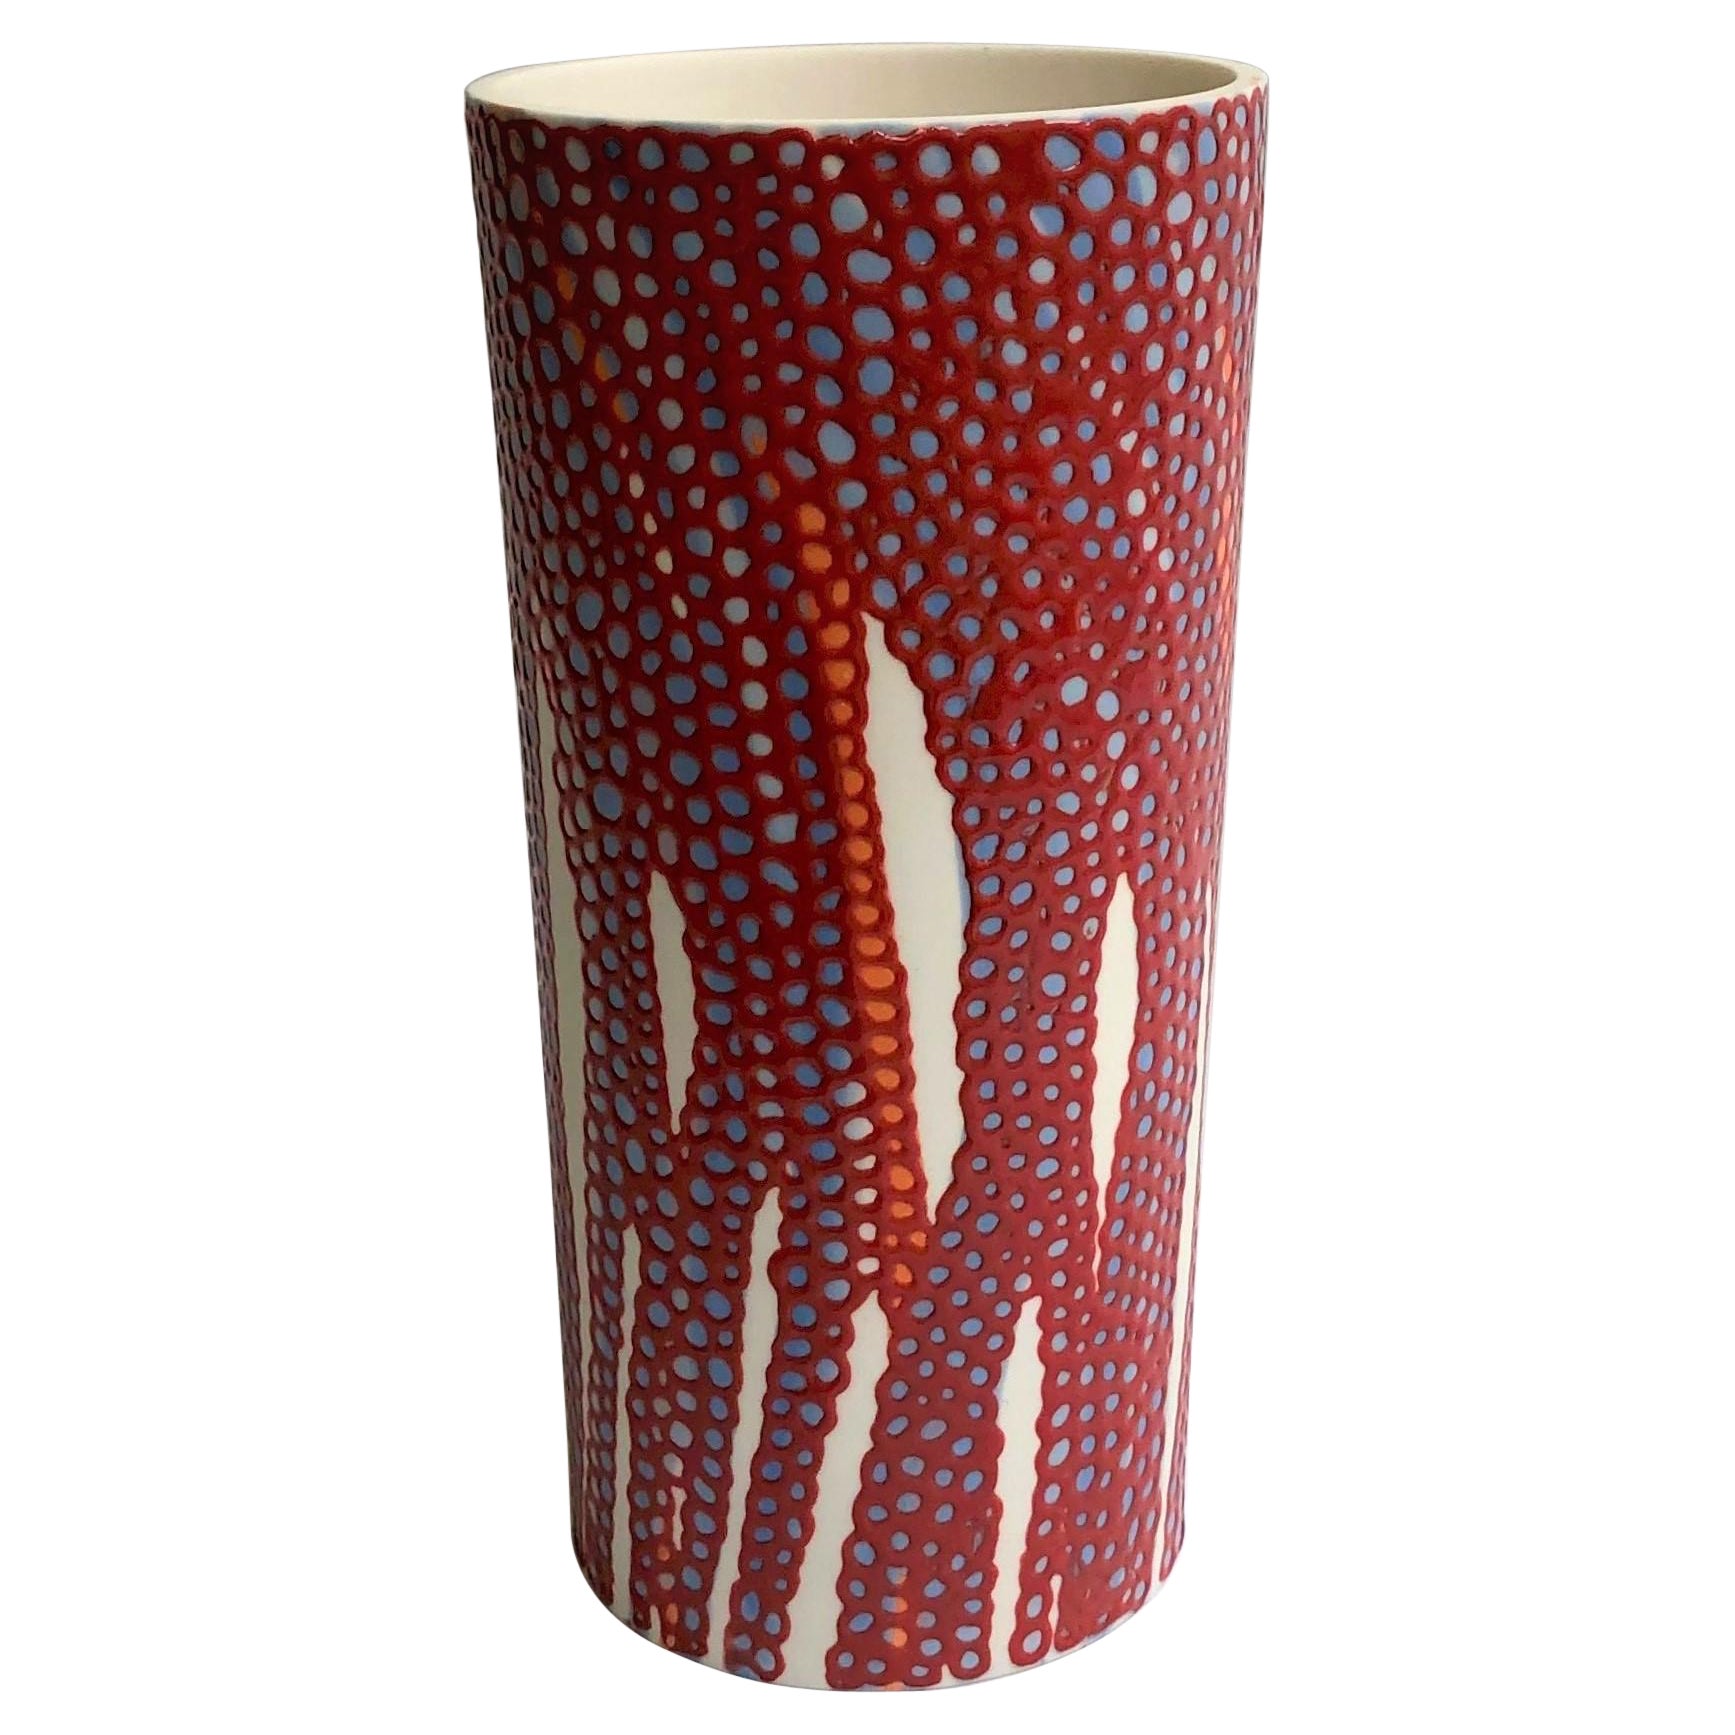 Porcelain Vase by Eugenio Michelini Unique Parianware Contemporary 21st Century